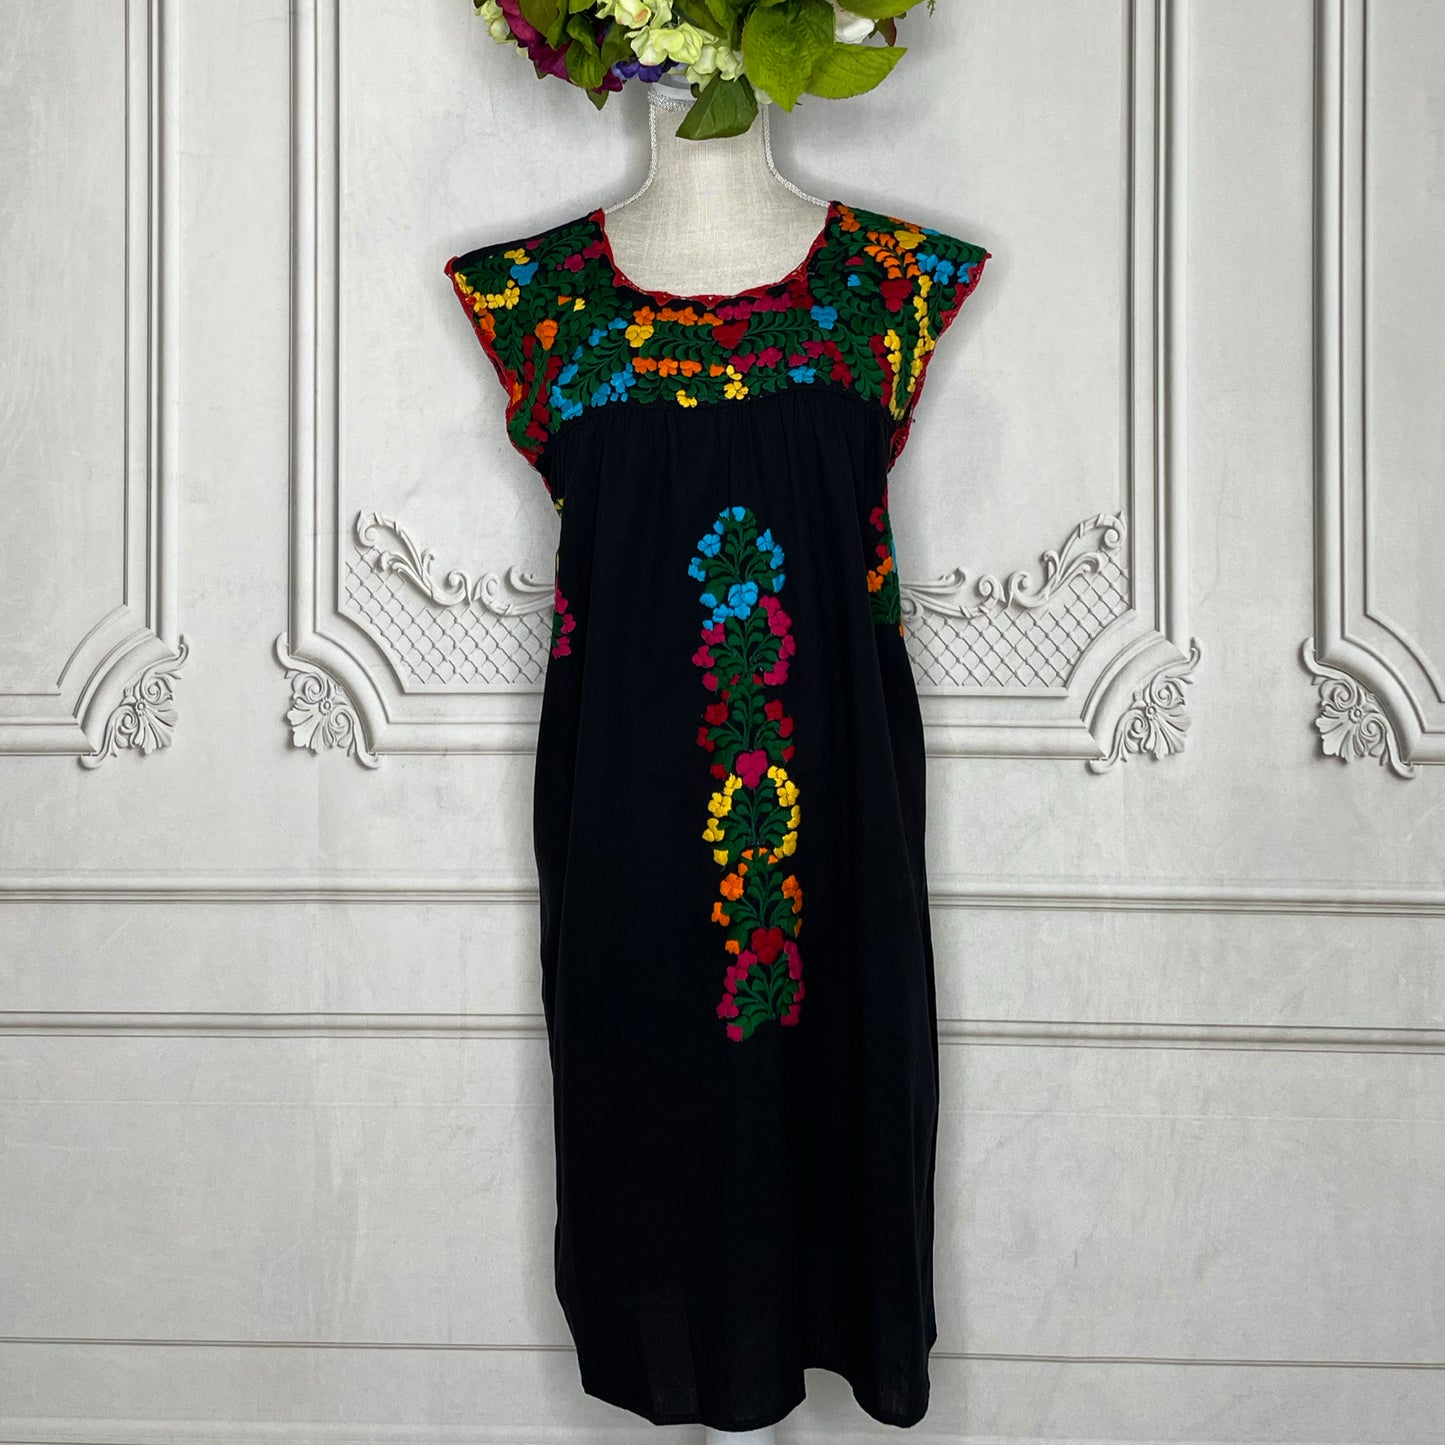 San Antonino Sleeveless Dress - Knee Length Cotton Embroidery